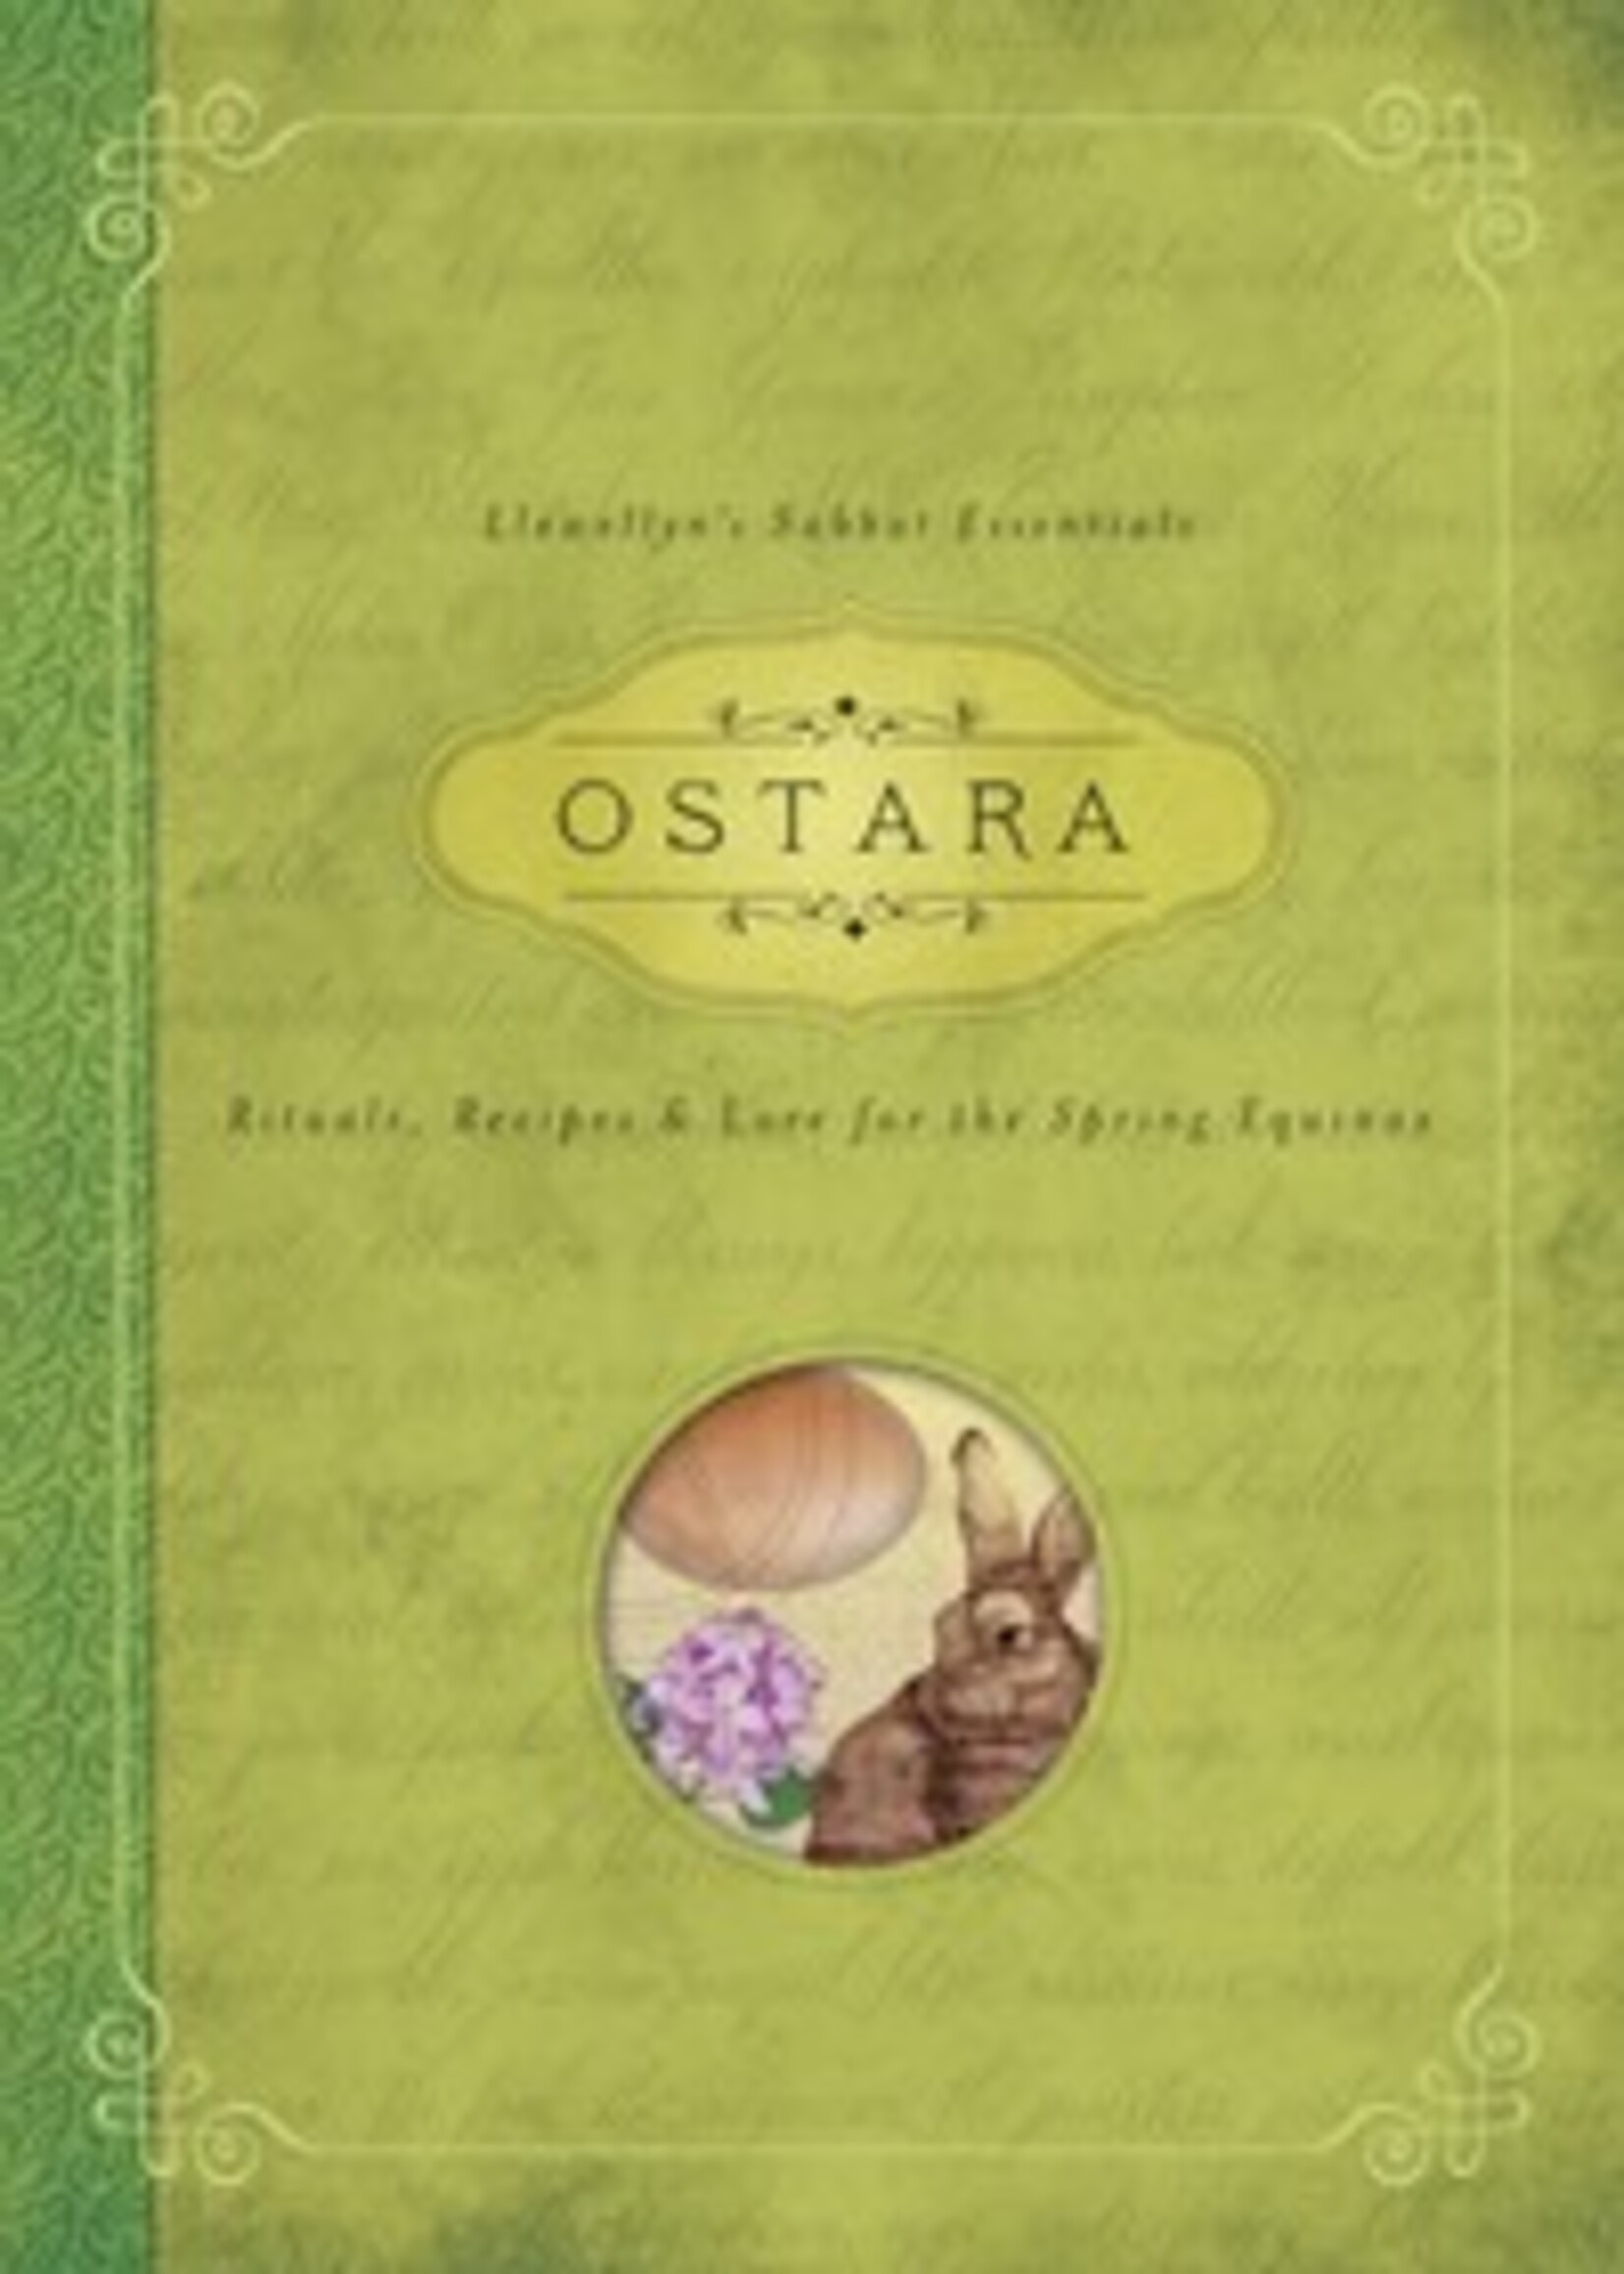 Llewellyn's Sabbat Essentials: Ostara Rituals, Recipes, & Lore for the Spring Equinox by Kerri Connor